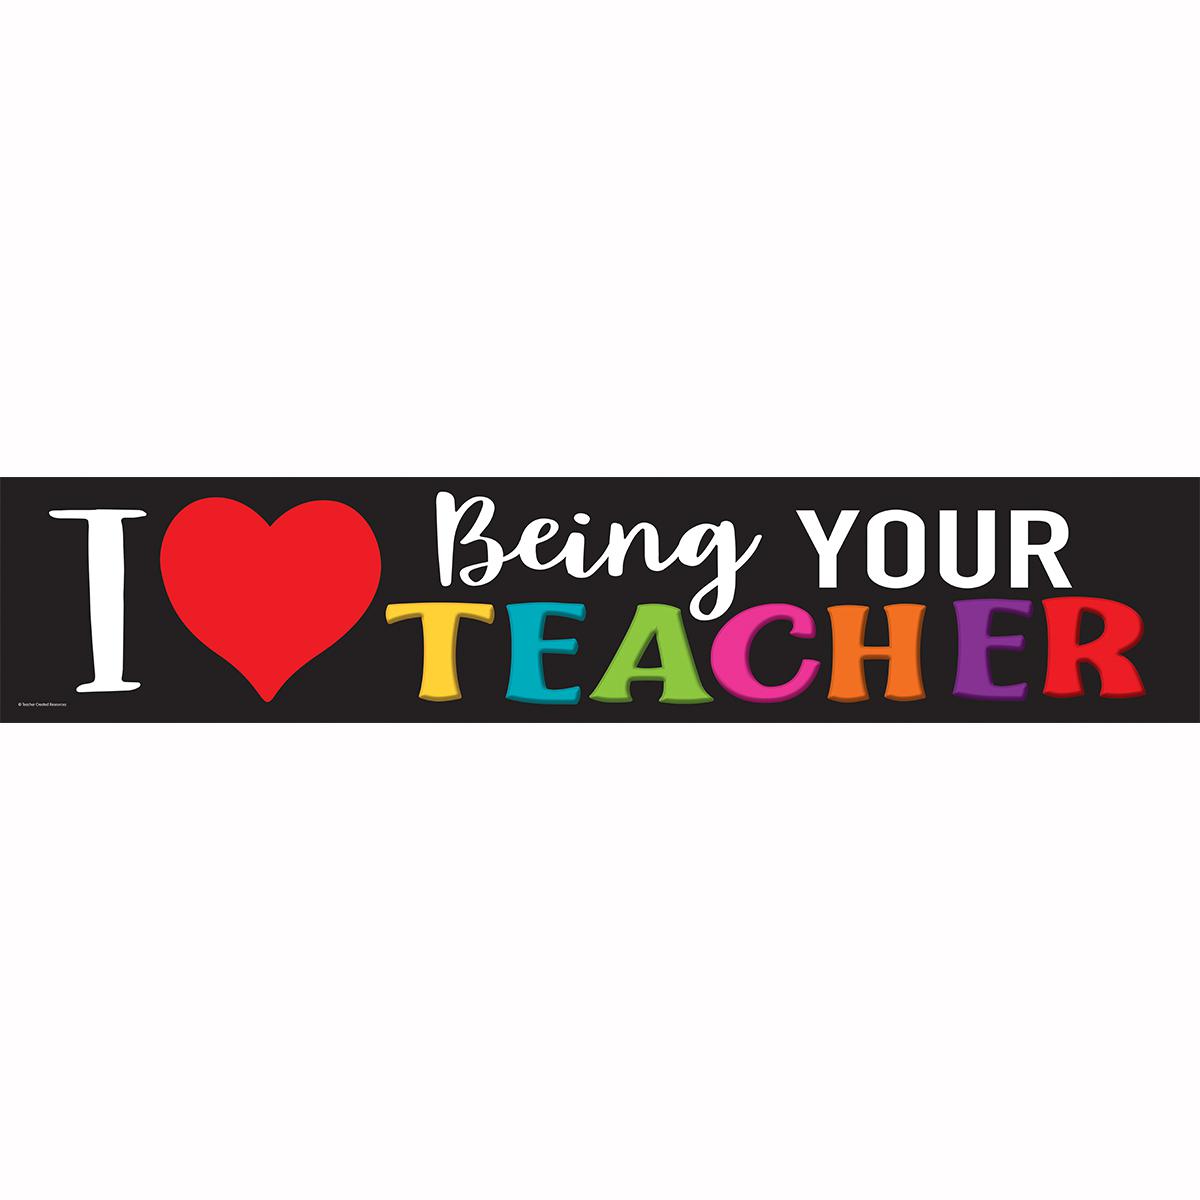  I Love Being Your Teacher Banner 